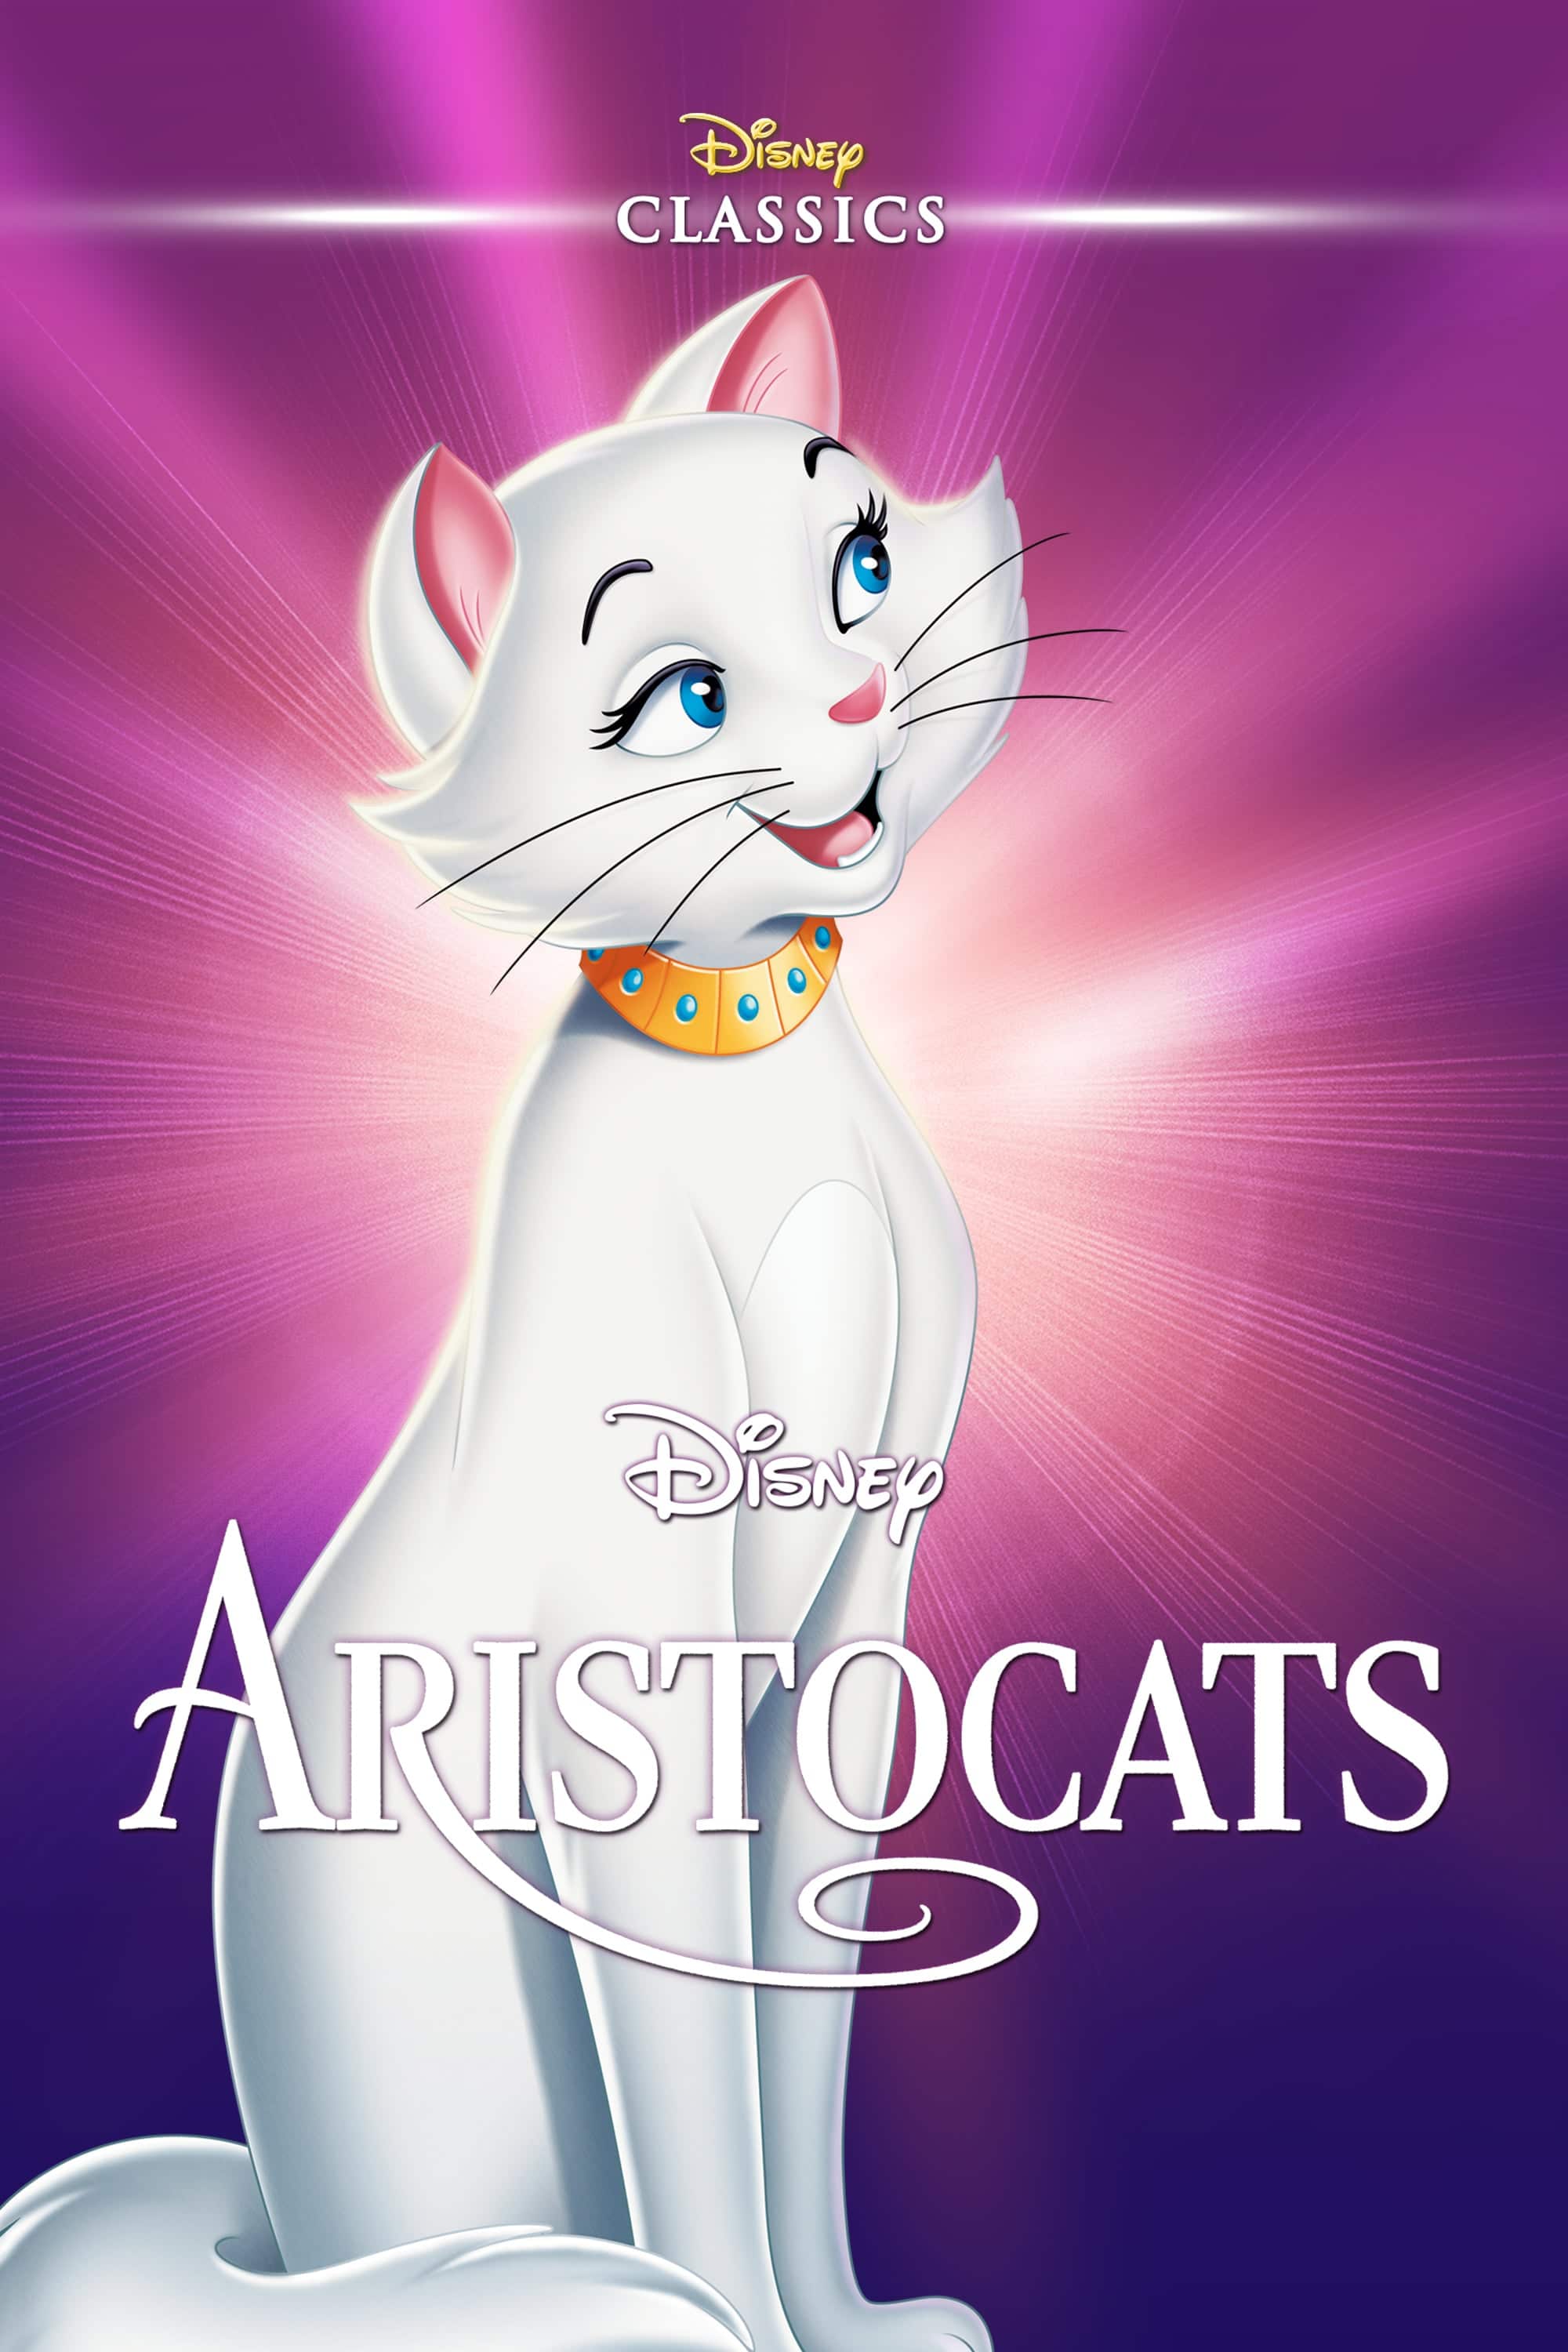 Plakat von "Aristocats"